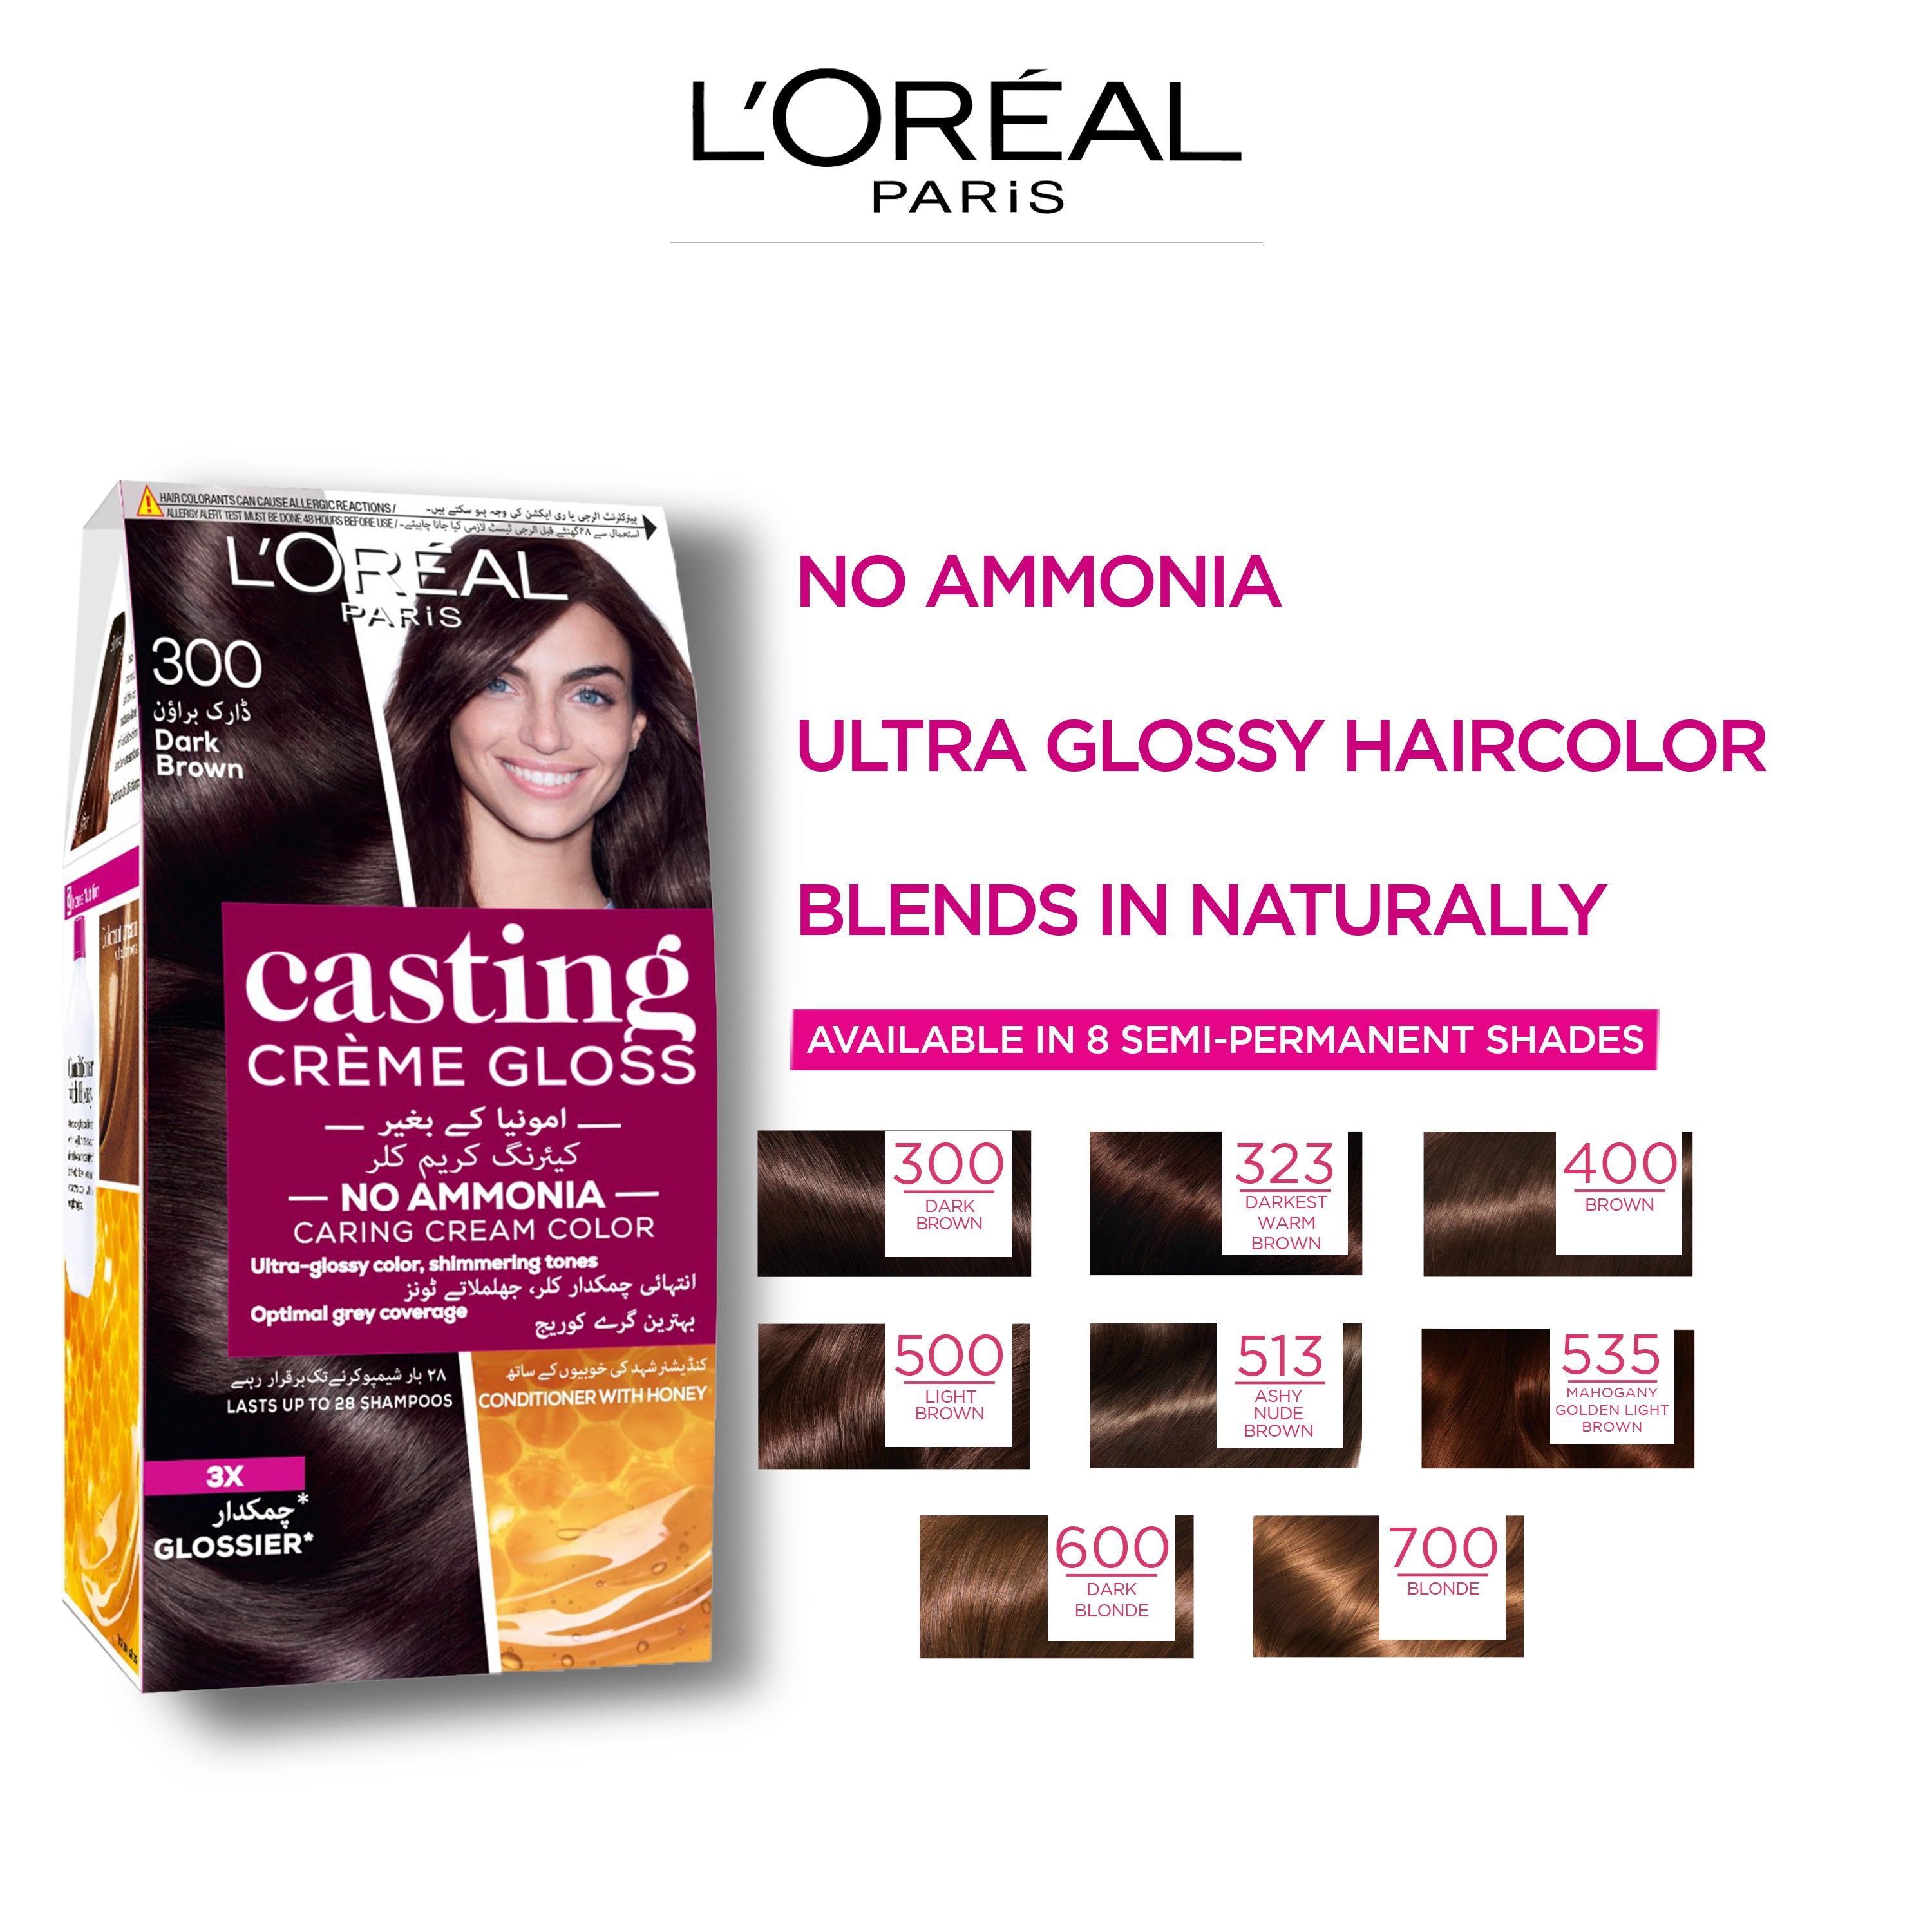 LOreal Paris Casting Creme Gloss - 400 Brown Hair Color